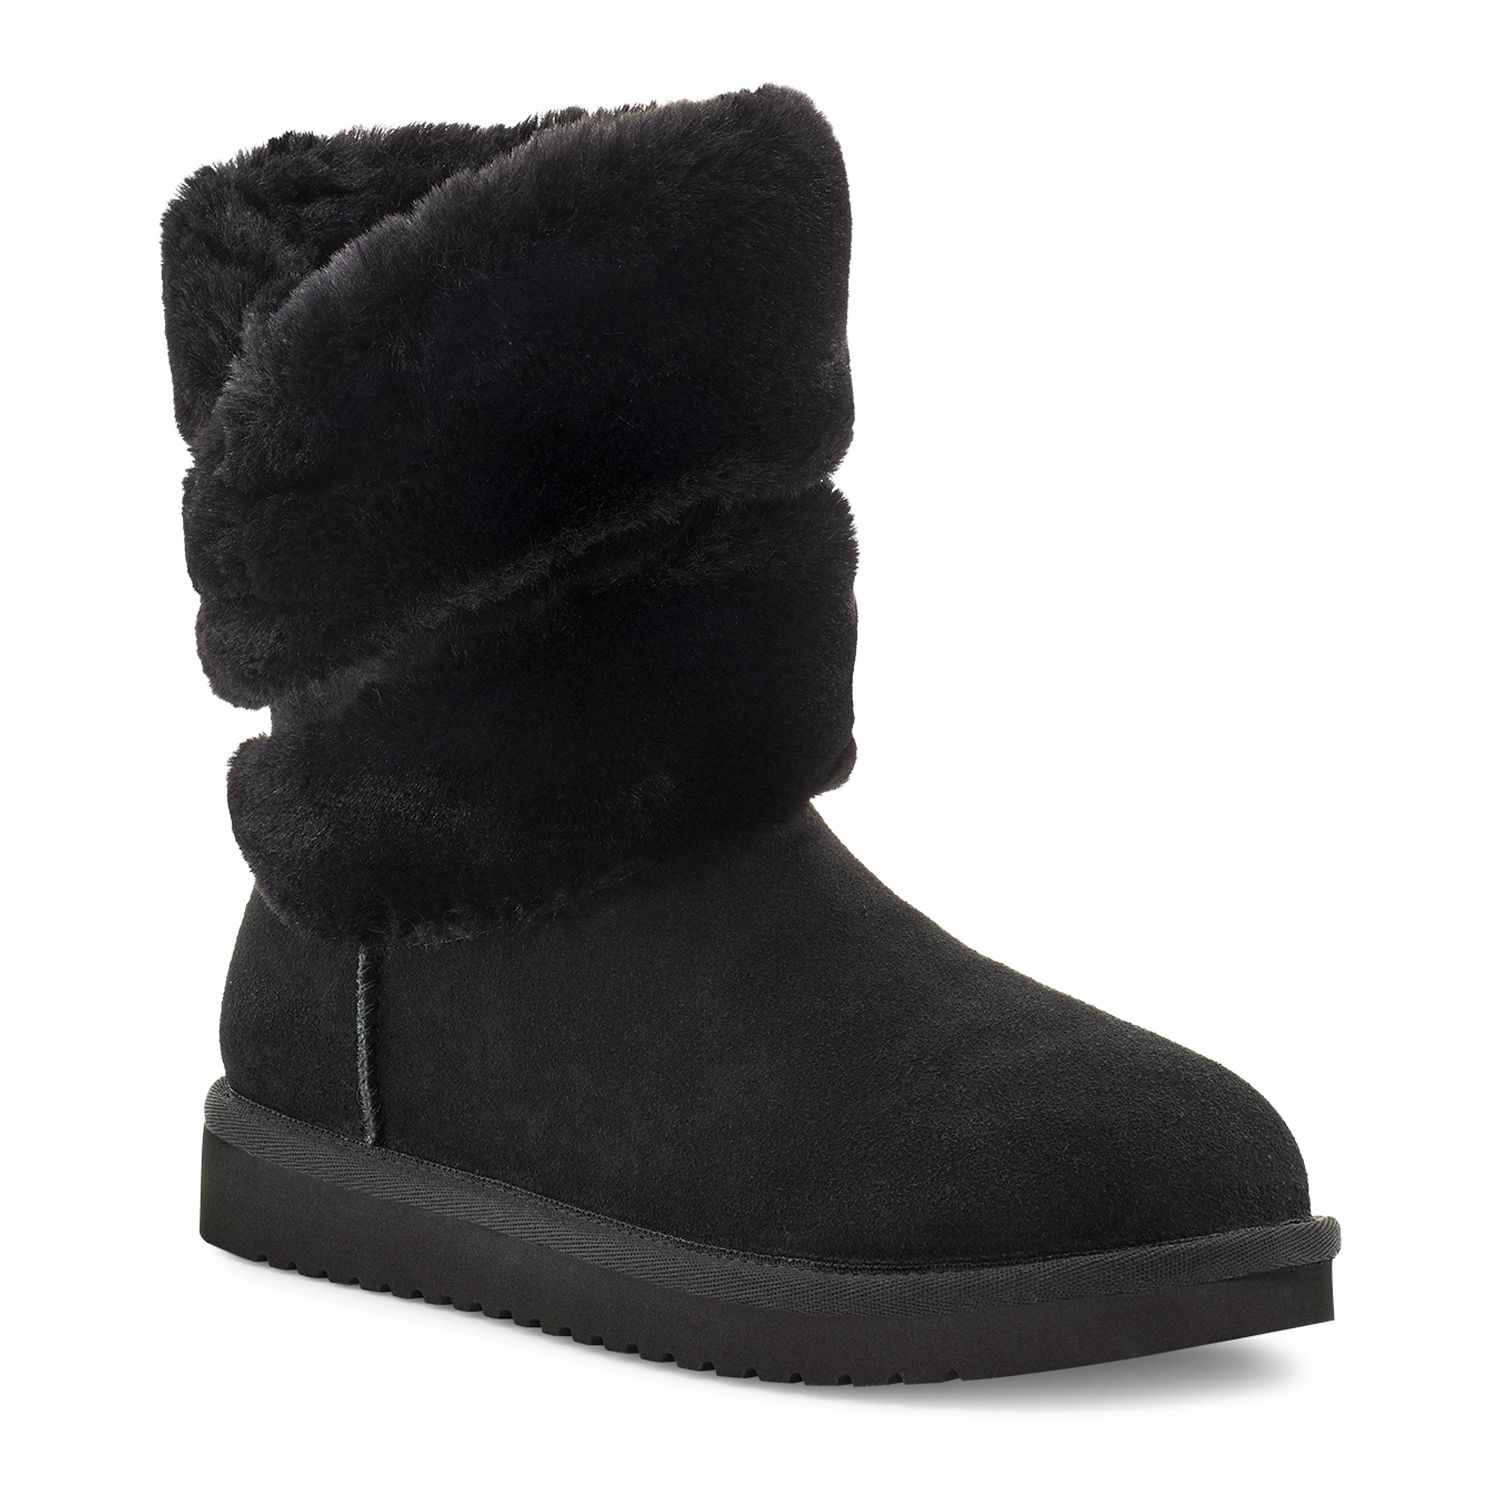 koolaburra by ugg classic short women's winter boots